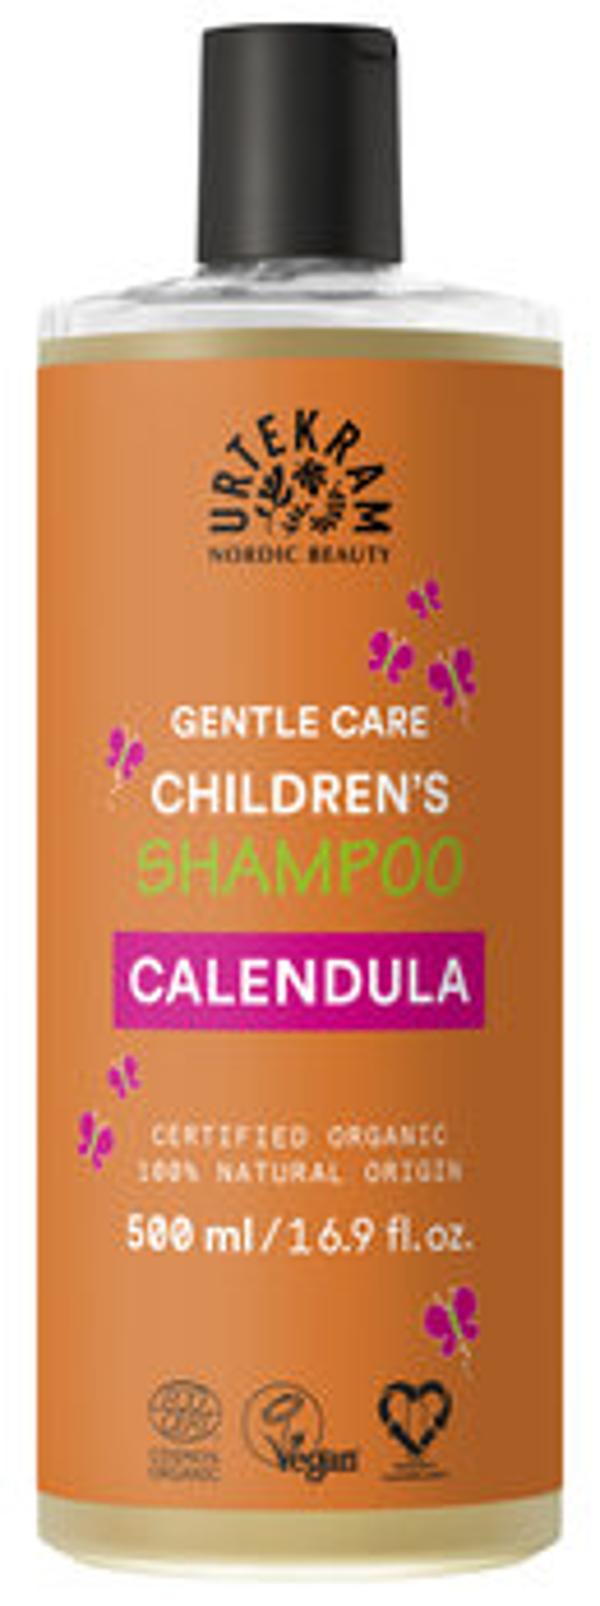 Produktfoto zu Calendula Kinder Shampoo 500ml